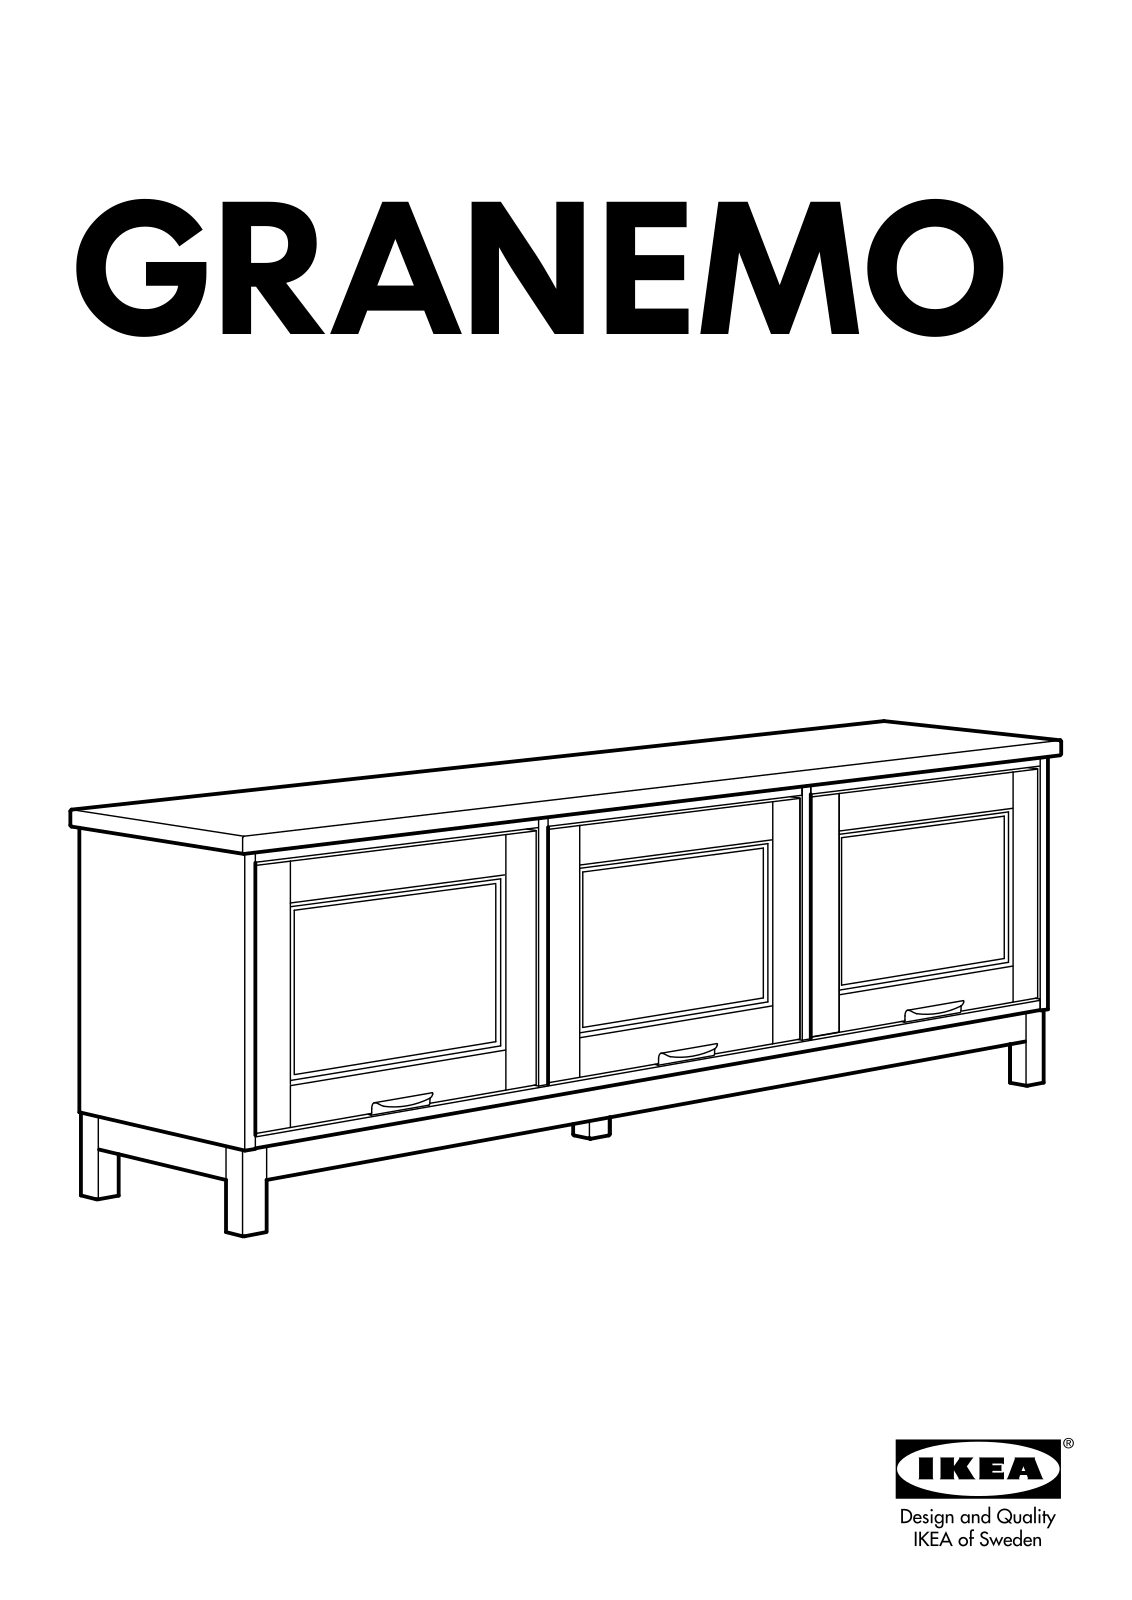 IKEA GRANEMO TV UNIT Assembly Instruction